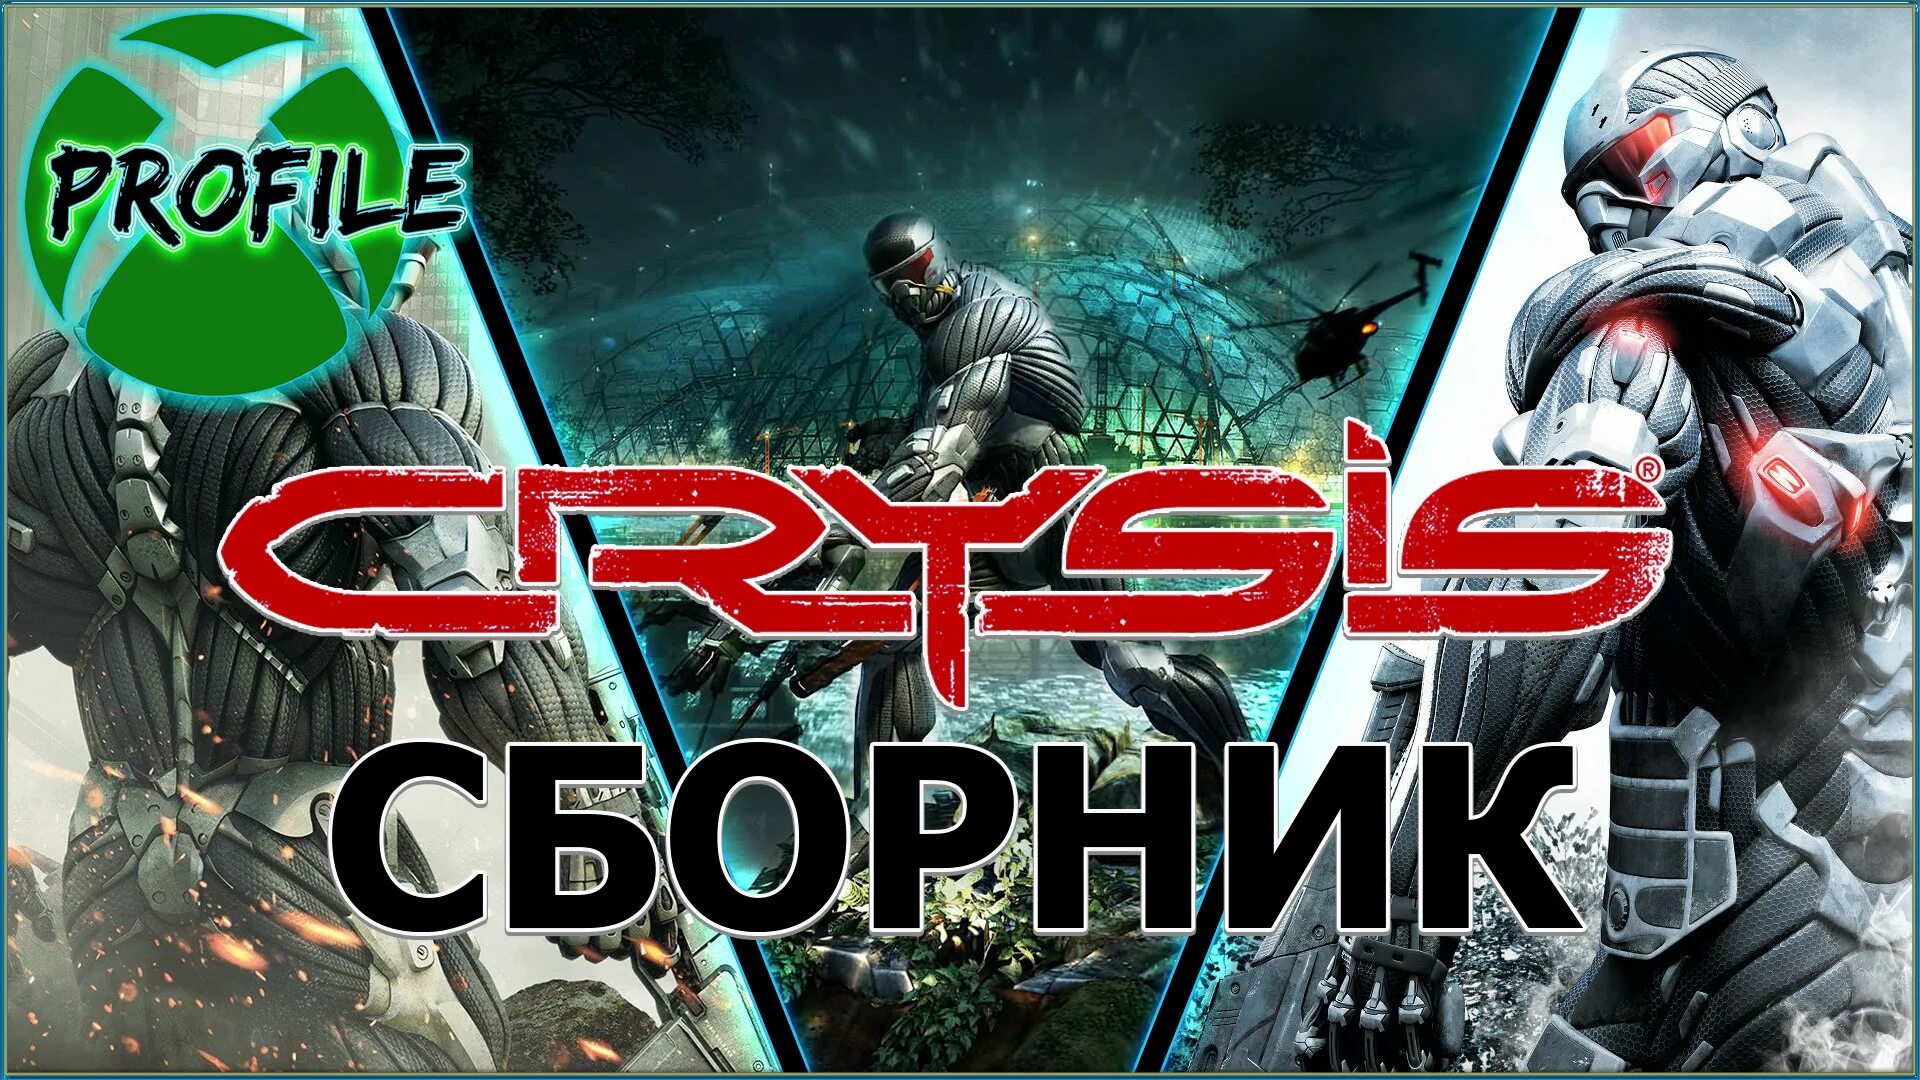 Crysis xbox 360. Crysis 1 Xbox 360 обложка. Кризис 2 хбокс 360. Crysis 3 Xbox 360. Crysis 3 Xbox 360 обложка.